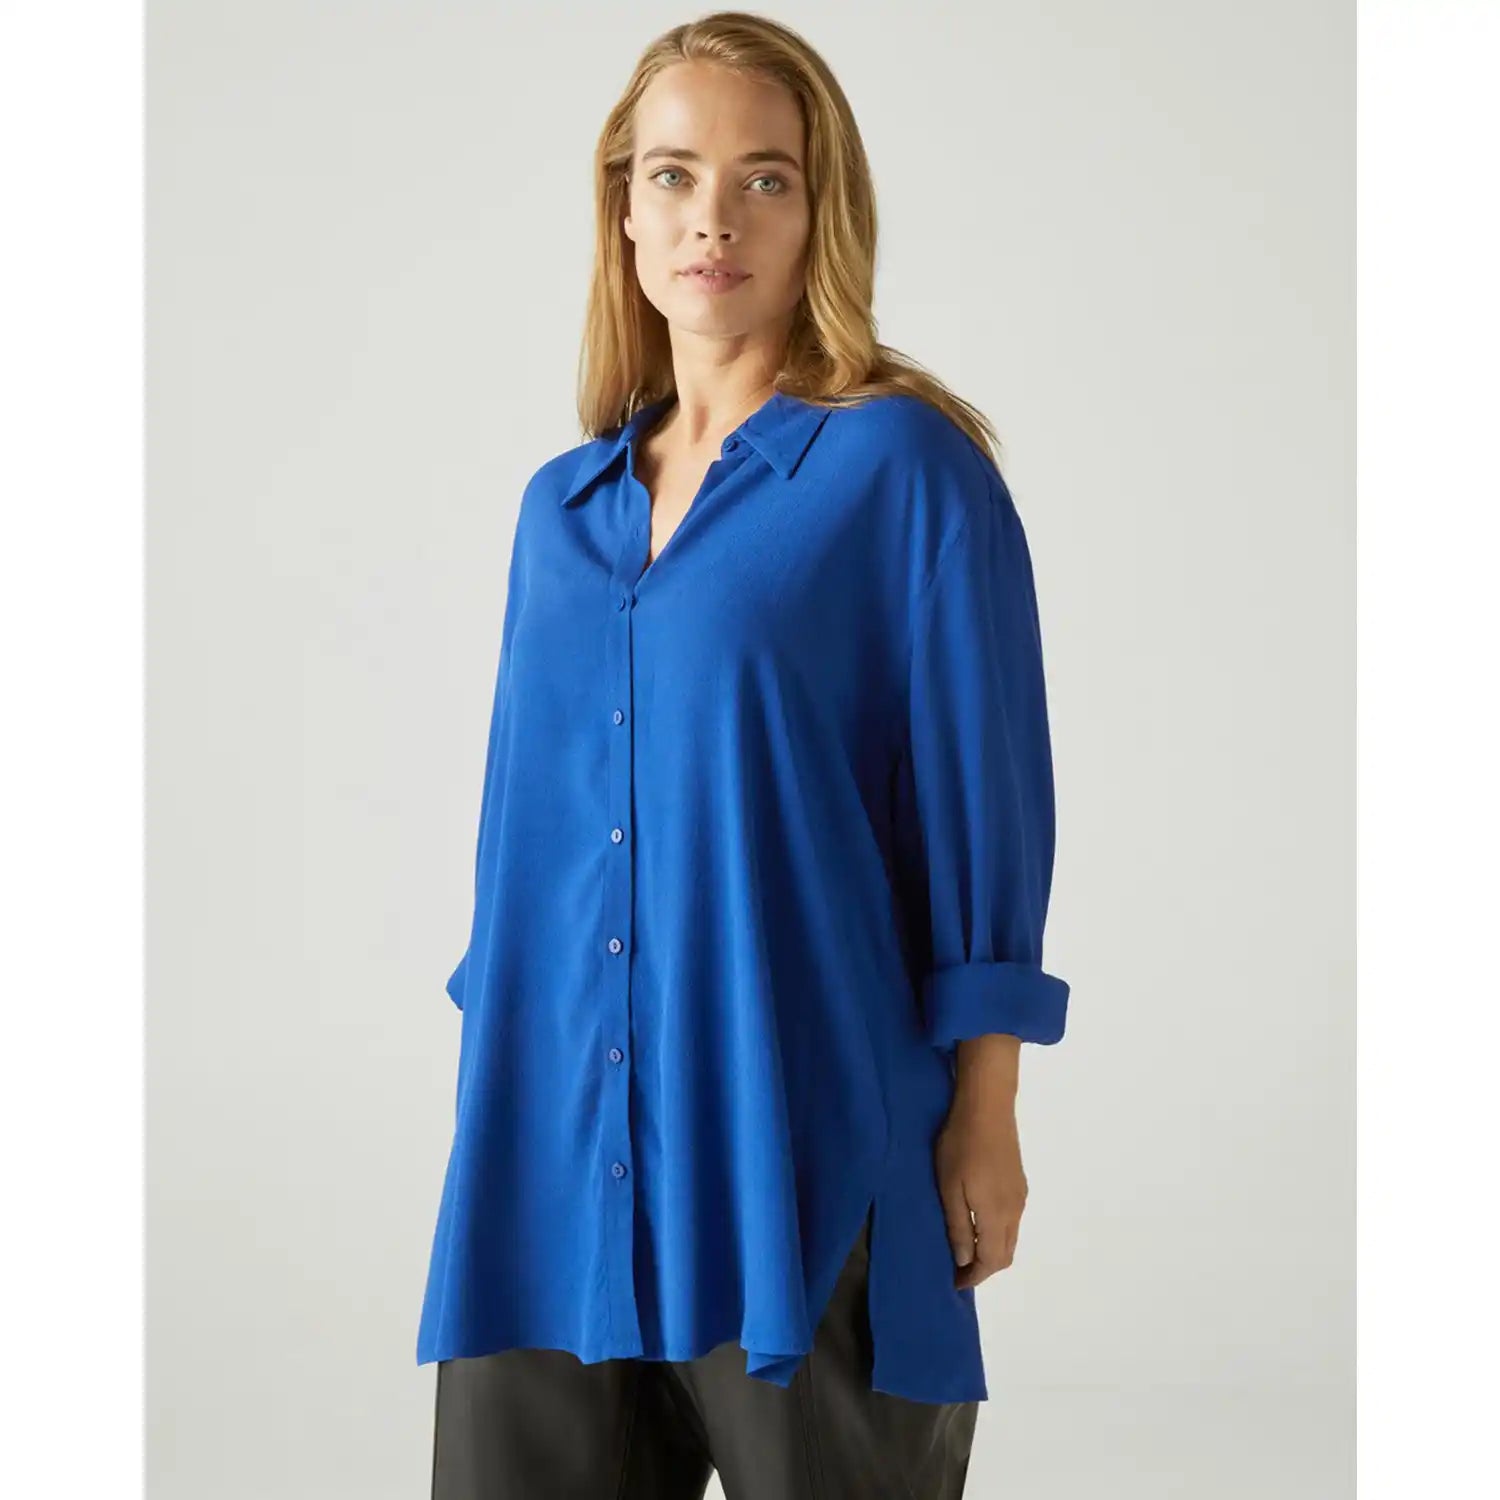 Couchel Plain Shirt - Blue Ink 1 Shaws Department Stores